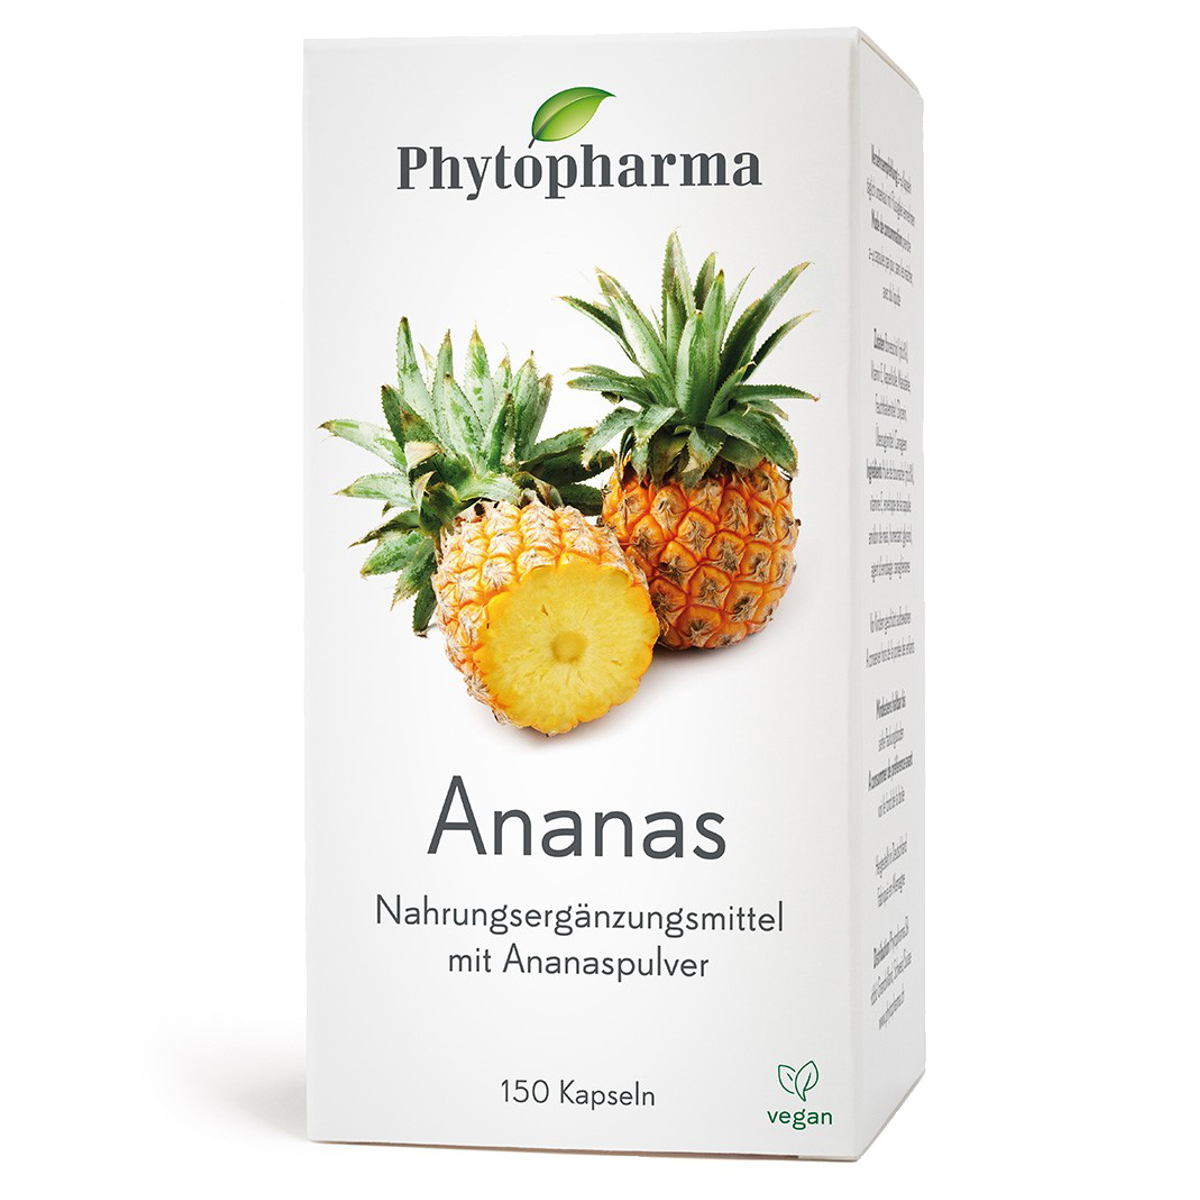 Phytopharma Ananas Kapseln mit Ananaspulver enthält Bromelain.